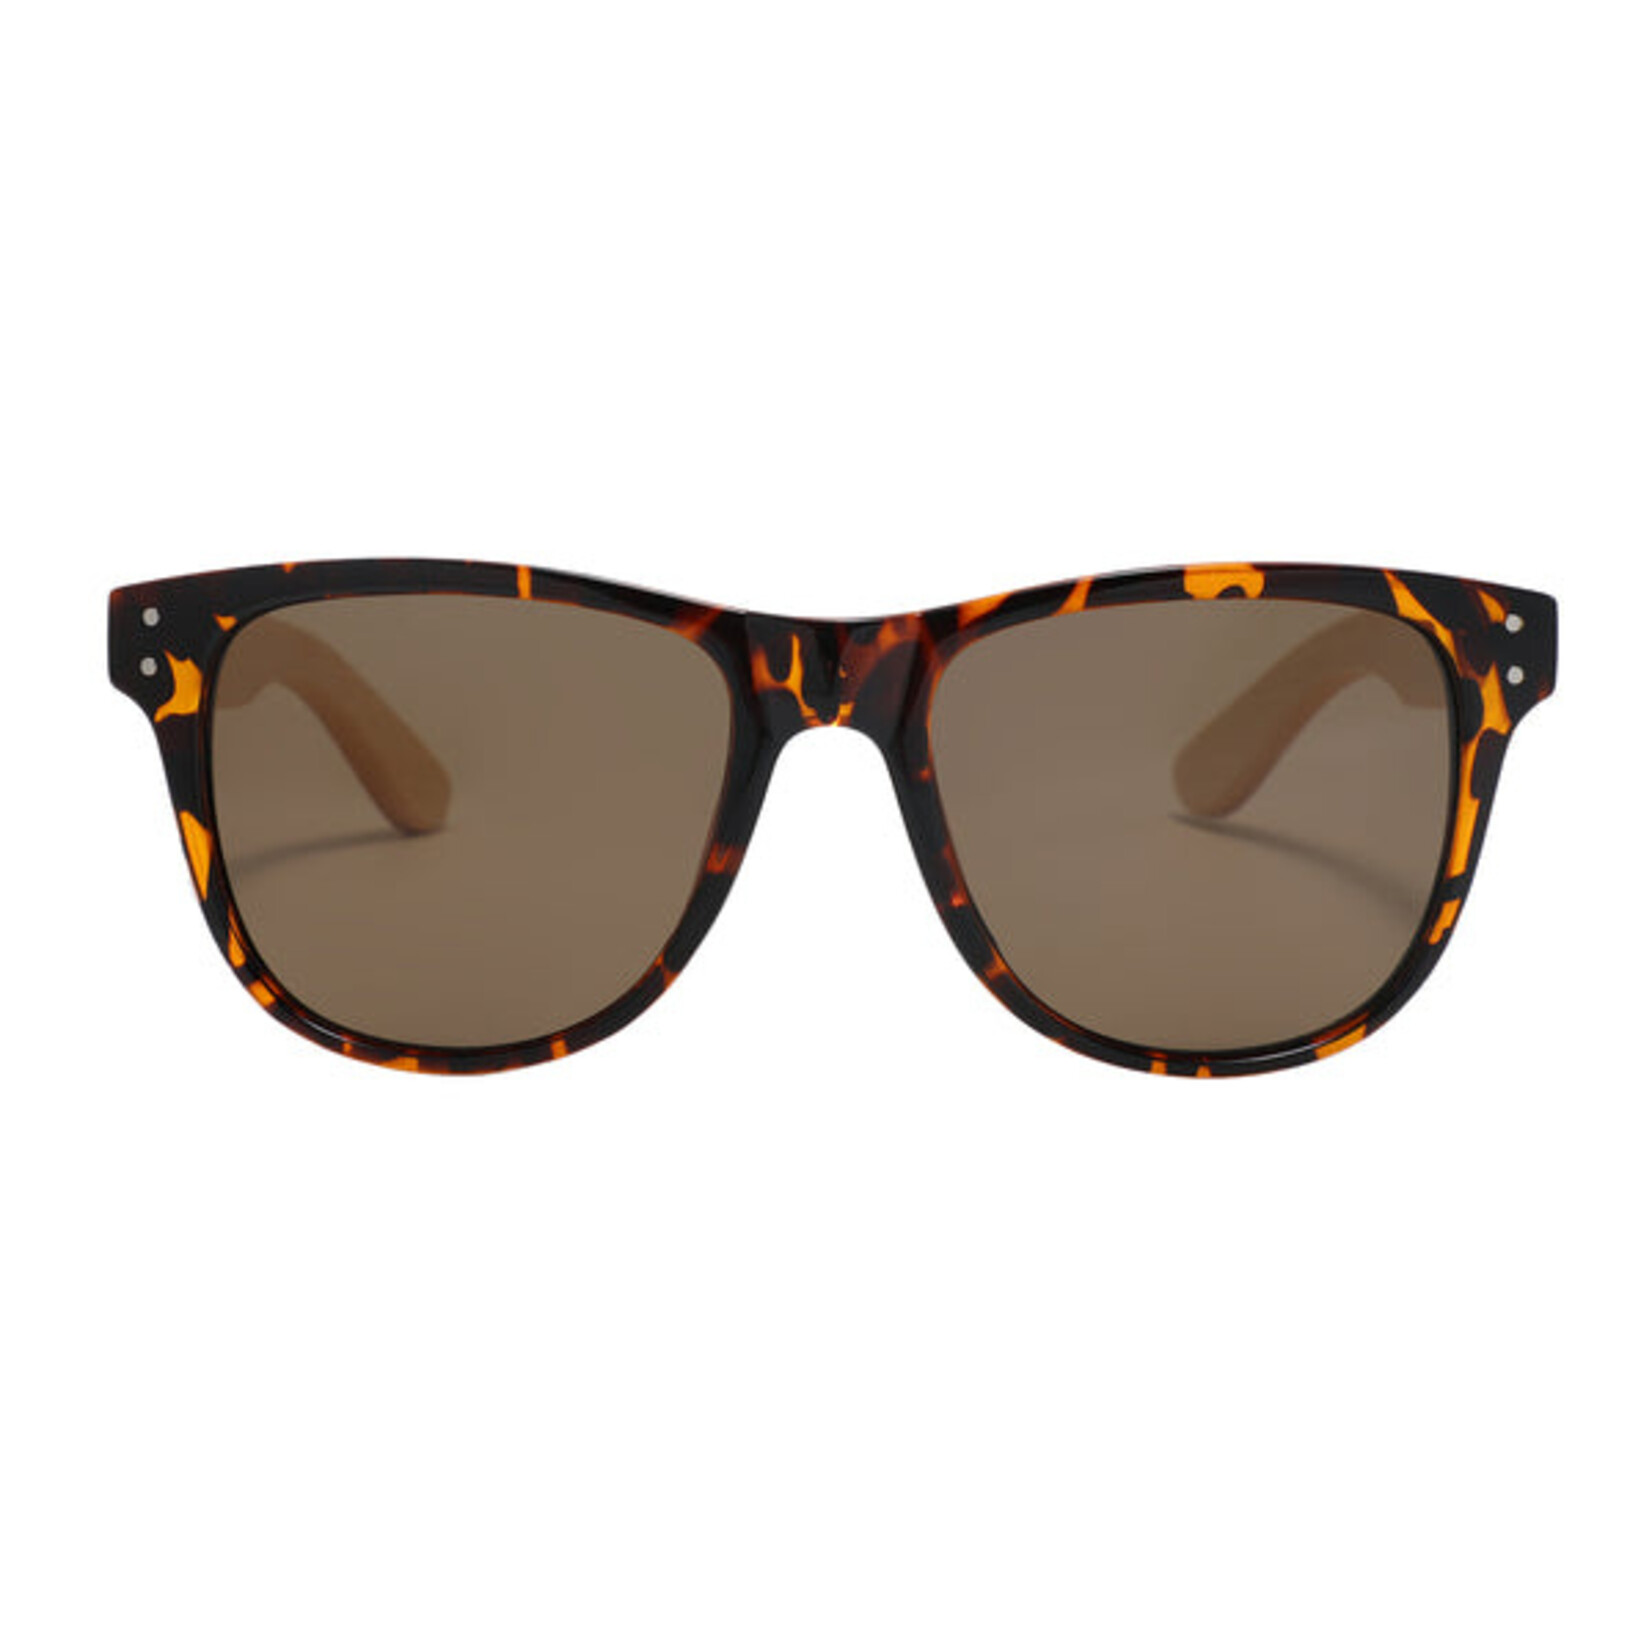 Polarized Sunglasses - Berlin - Tortoise